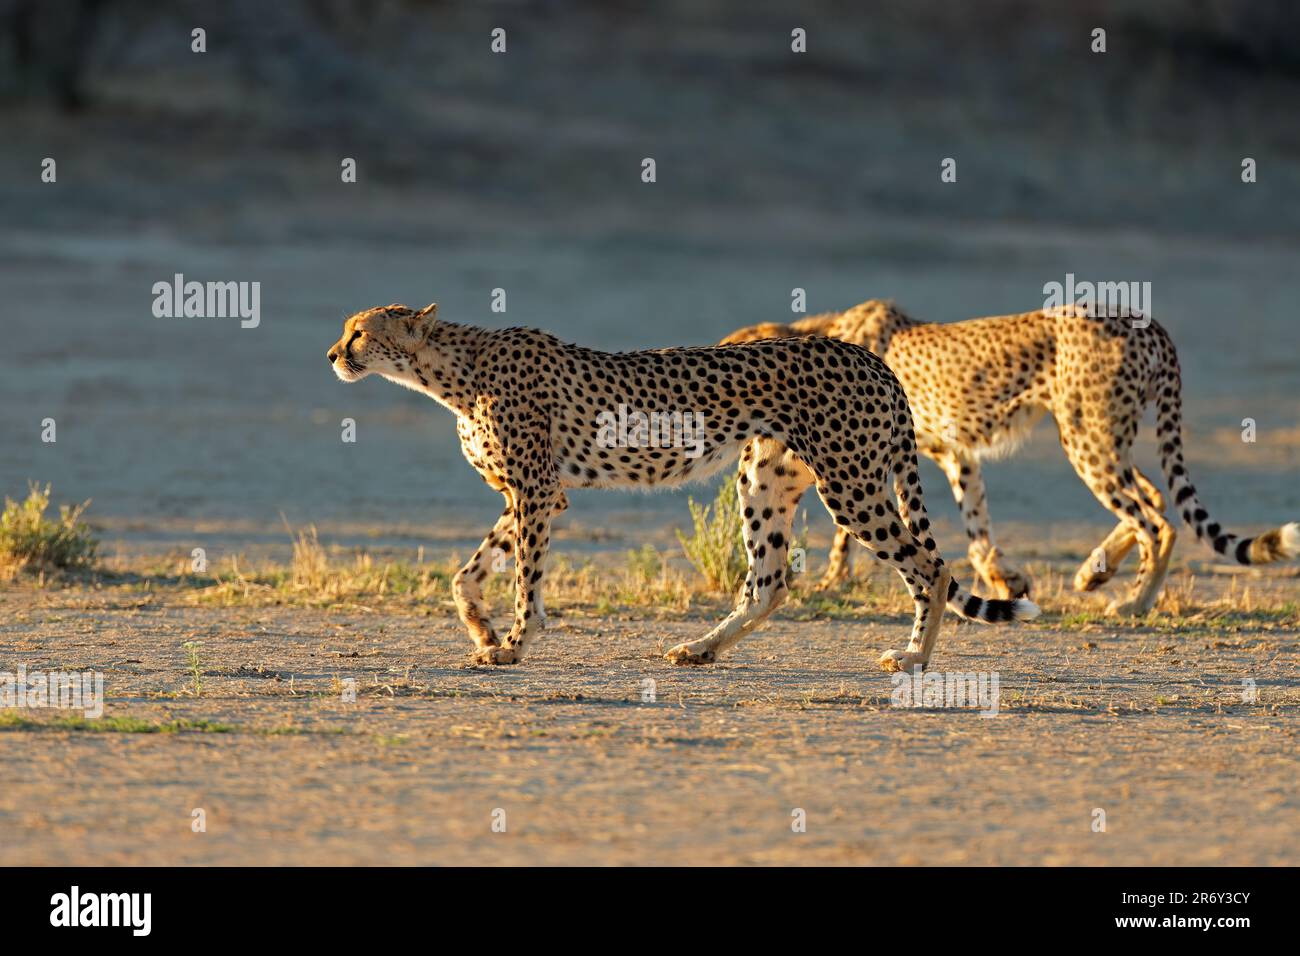 Two cheetahs (Acinonyx jubatus) stalking in natural habitat, Kalahari desert, South Africa Stock Photo